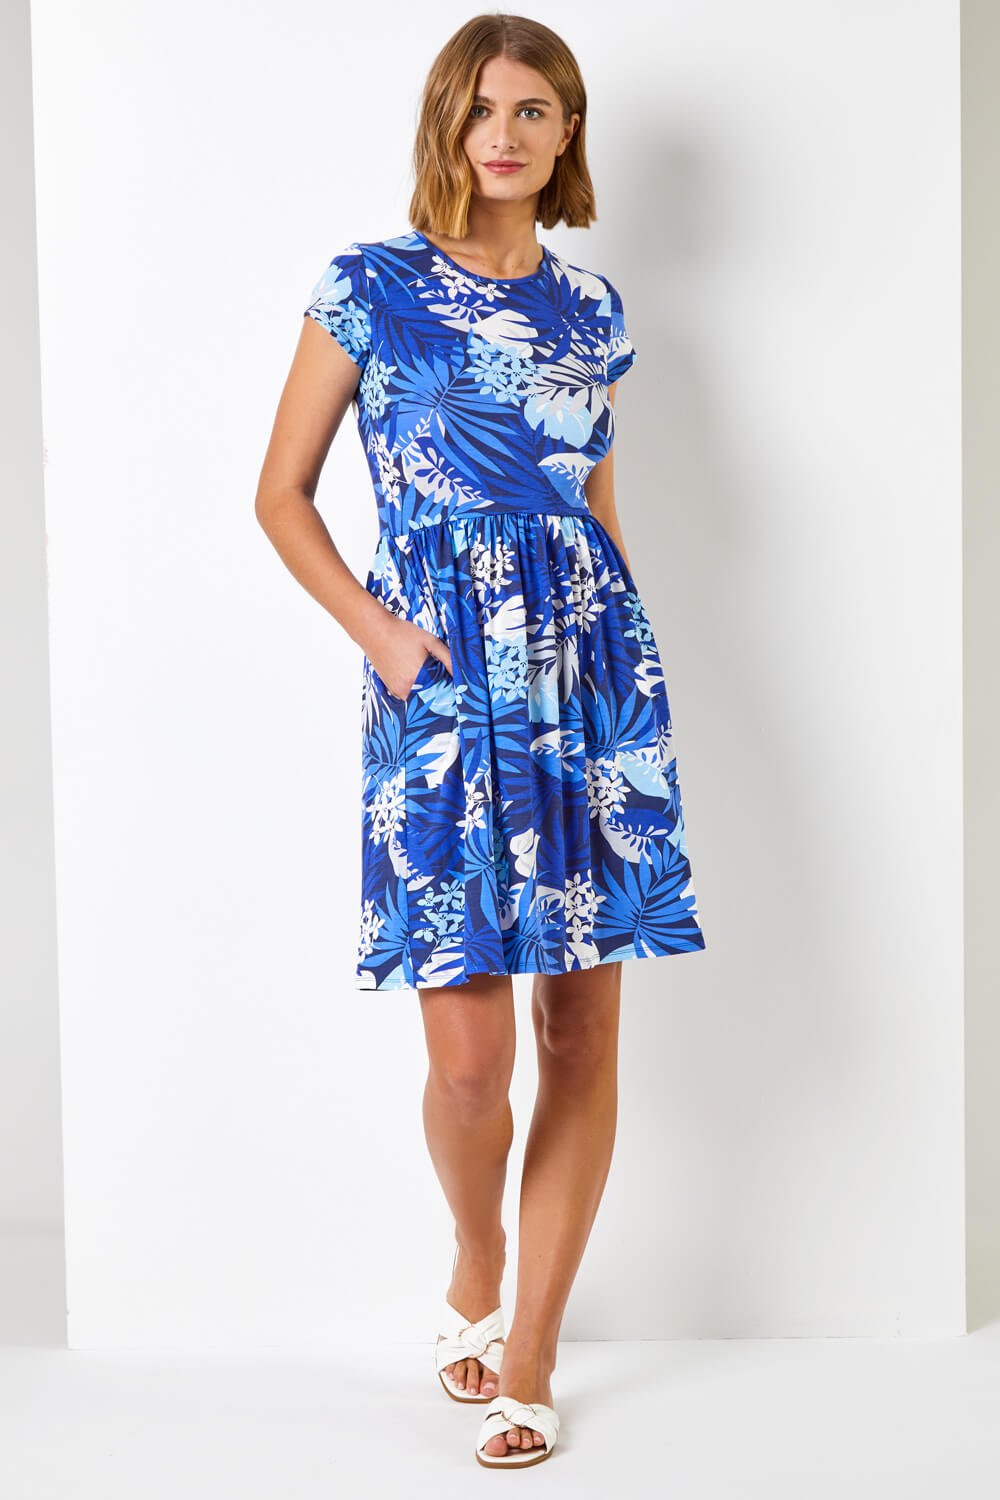 Royal Blue Floral Print Fit & Flare Dress, Image 3 of 4